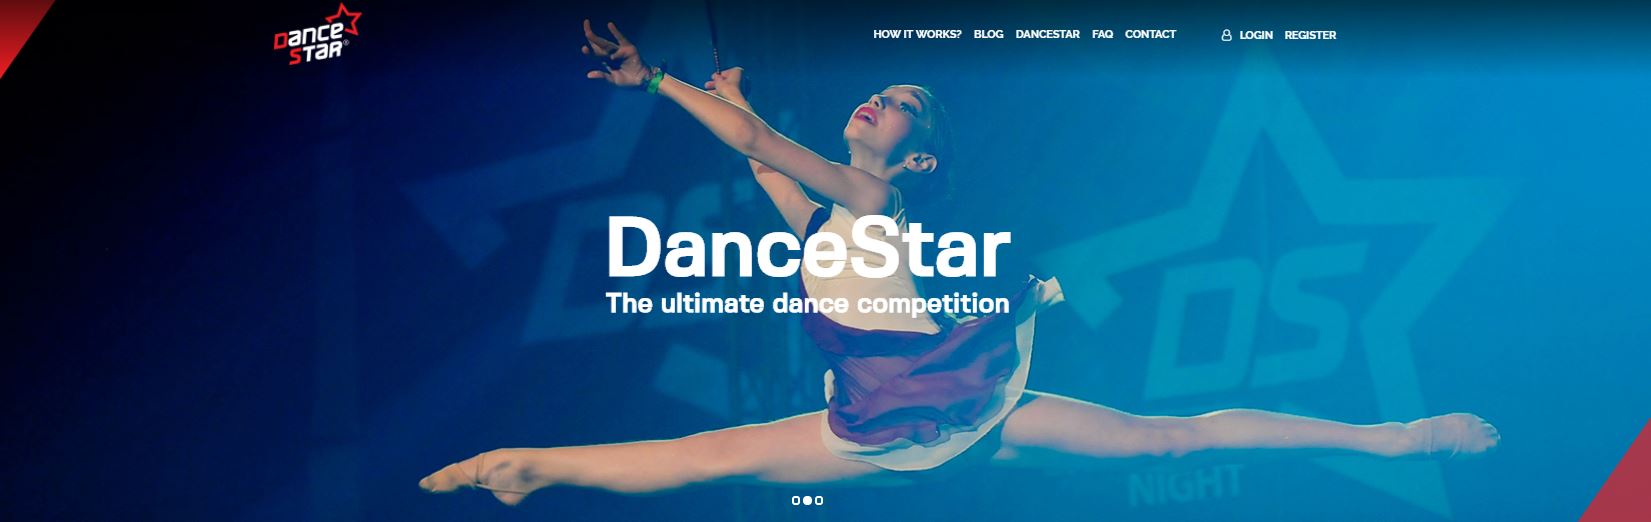 DanceStar new website is launched!